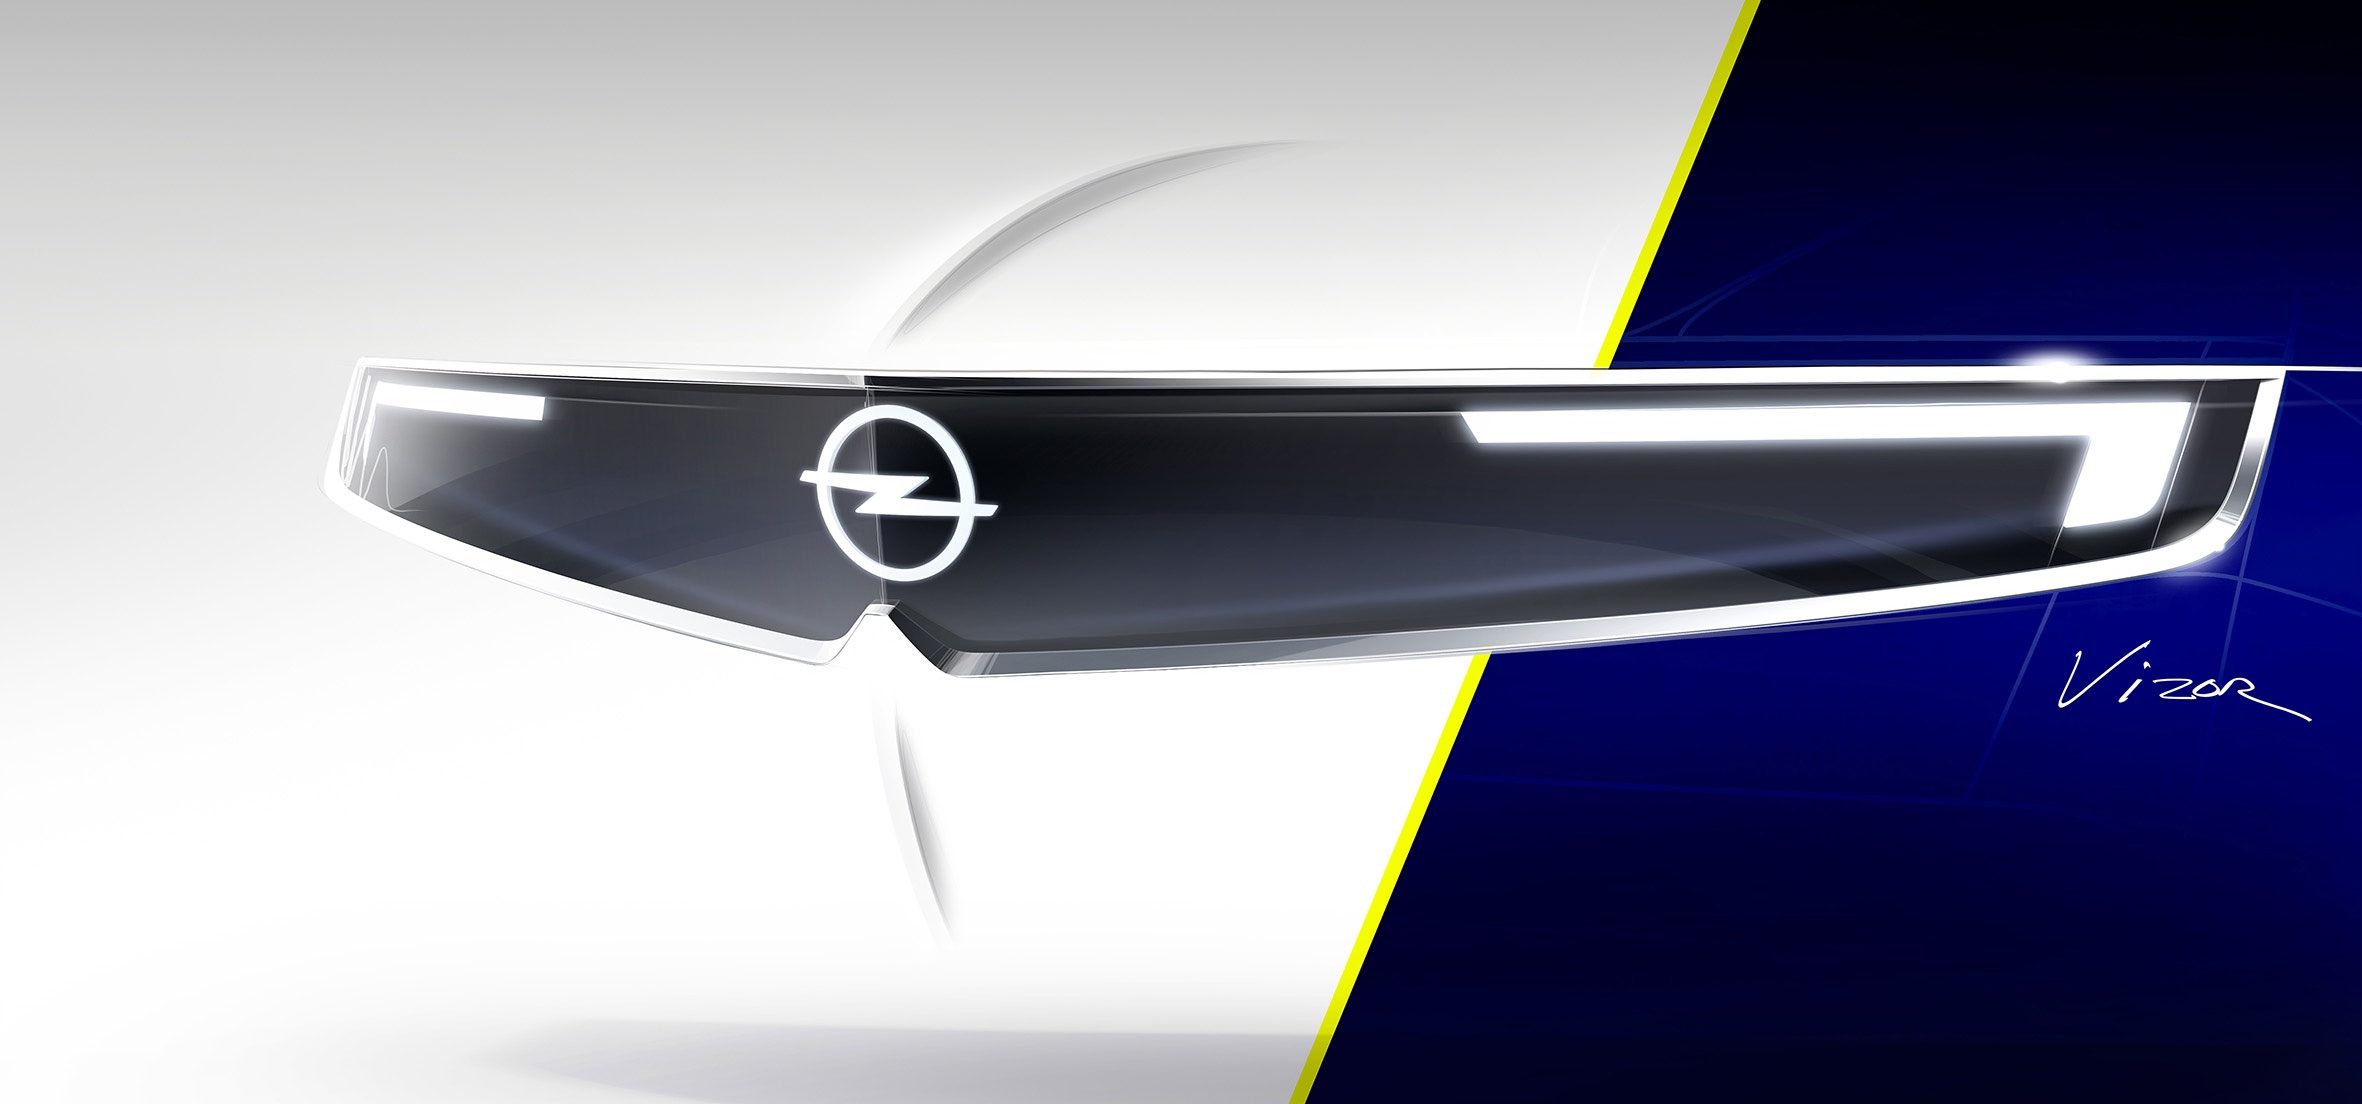 Nowy Opel Corsa od PSA - co o nim wiemy?